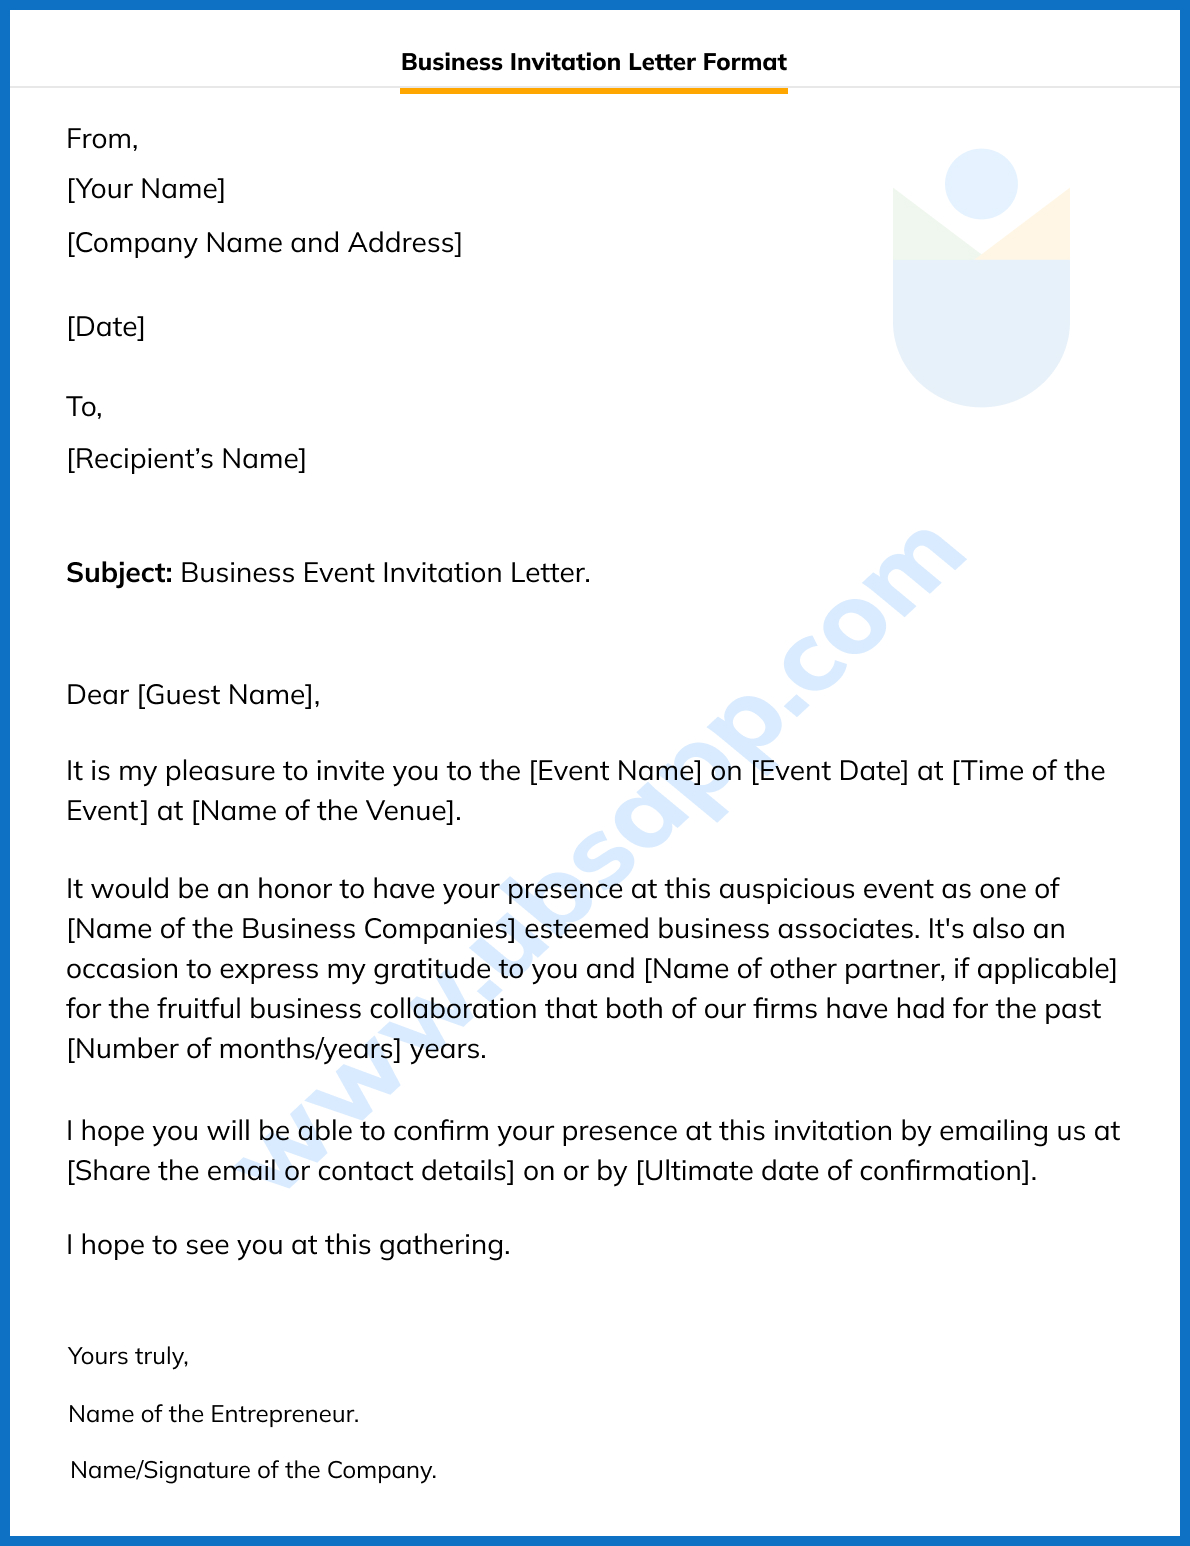 Business Invitation Letter Format